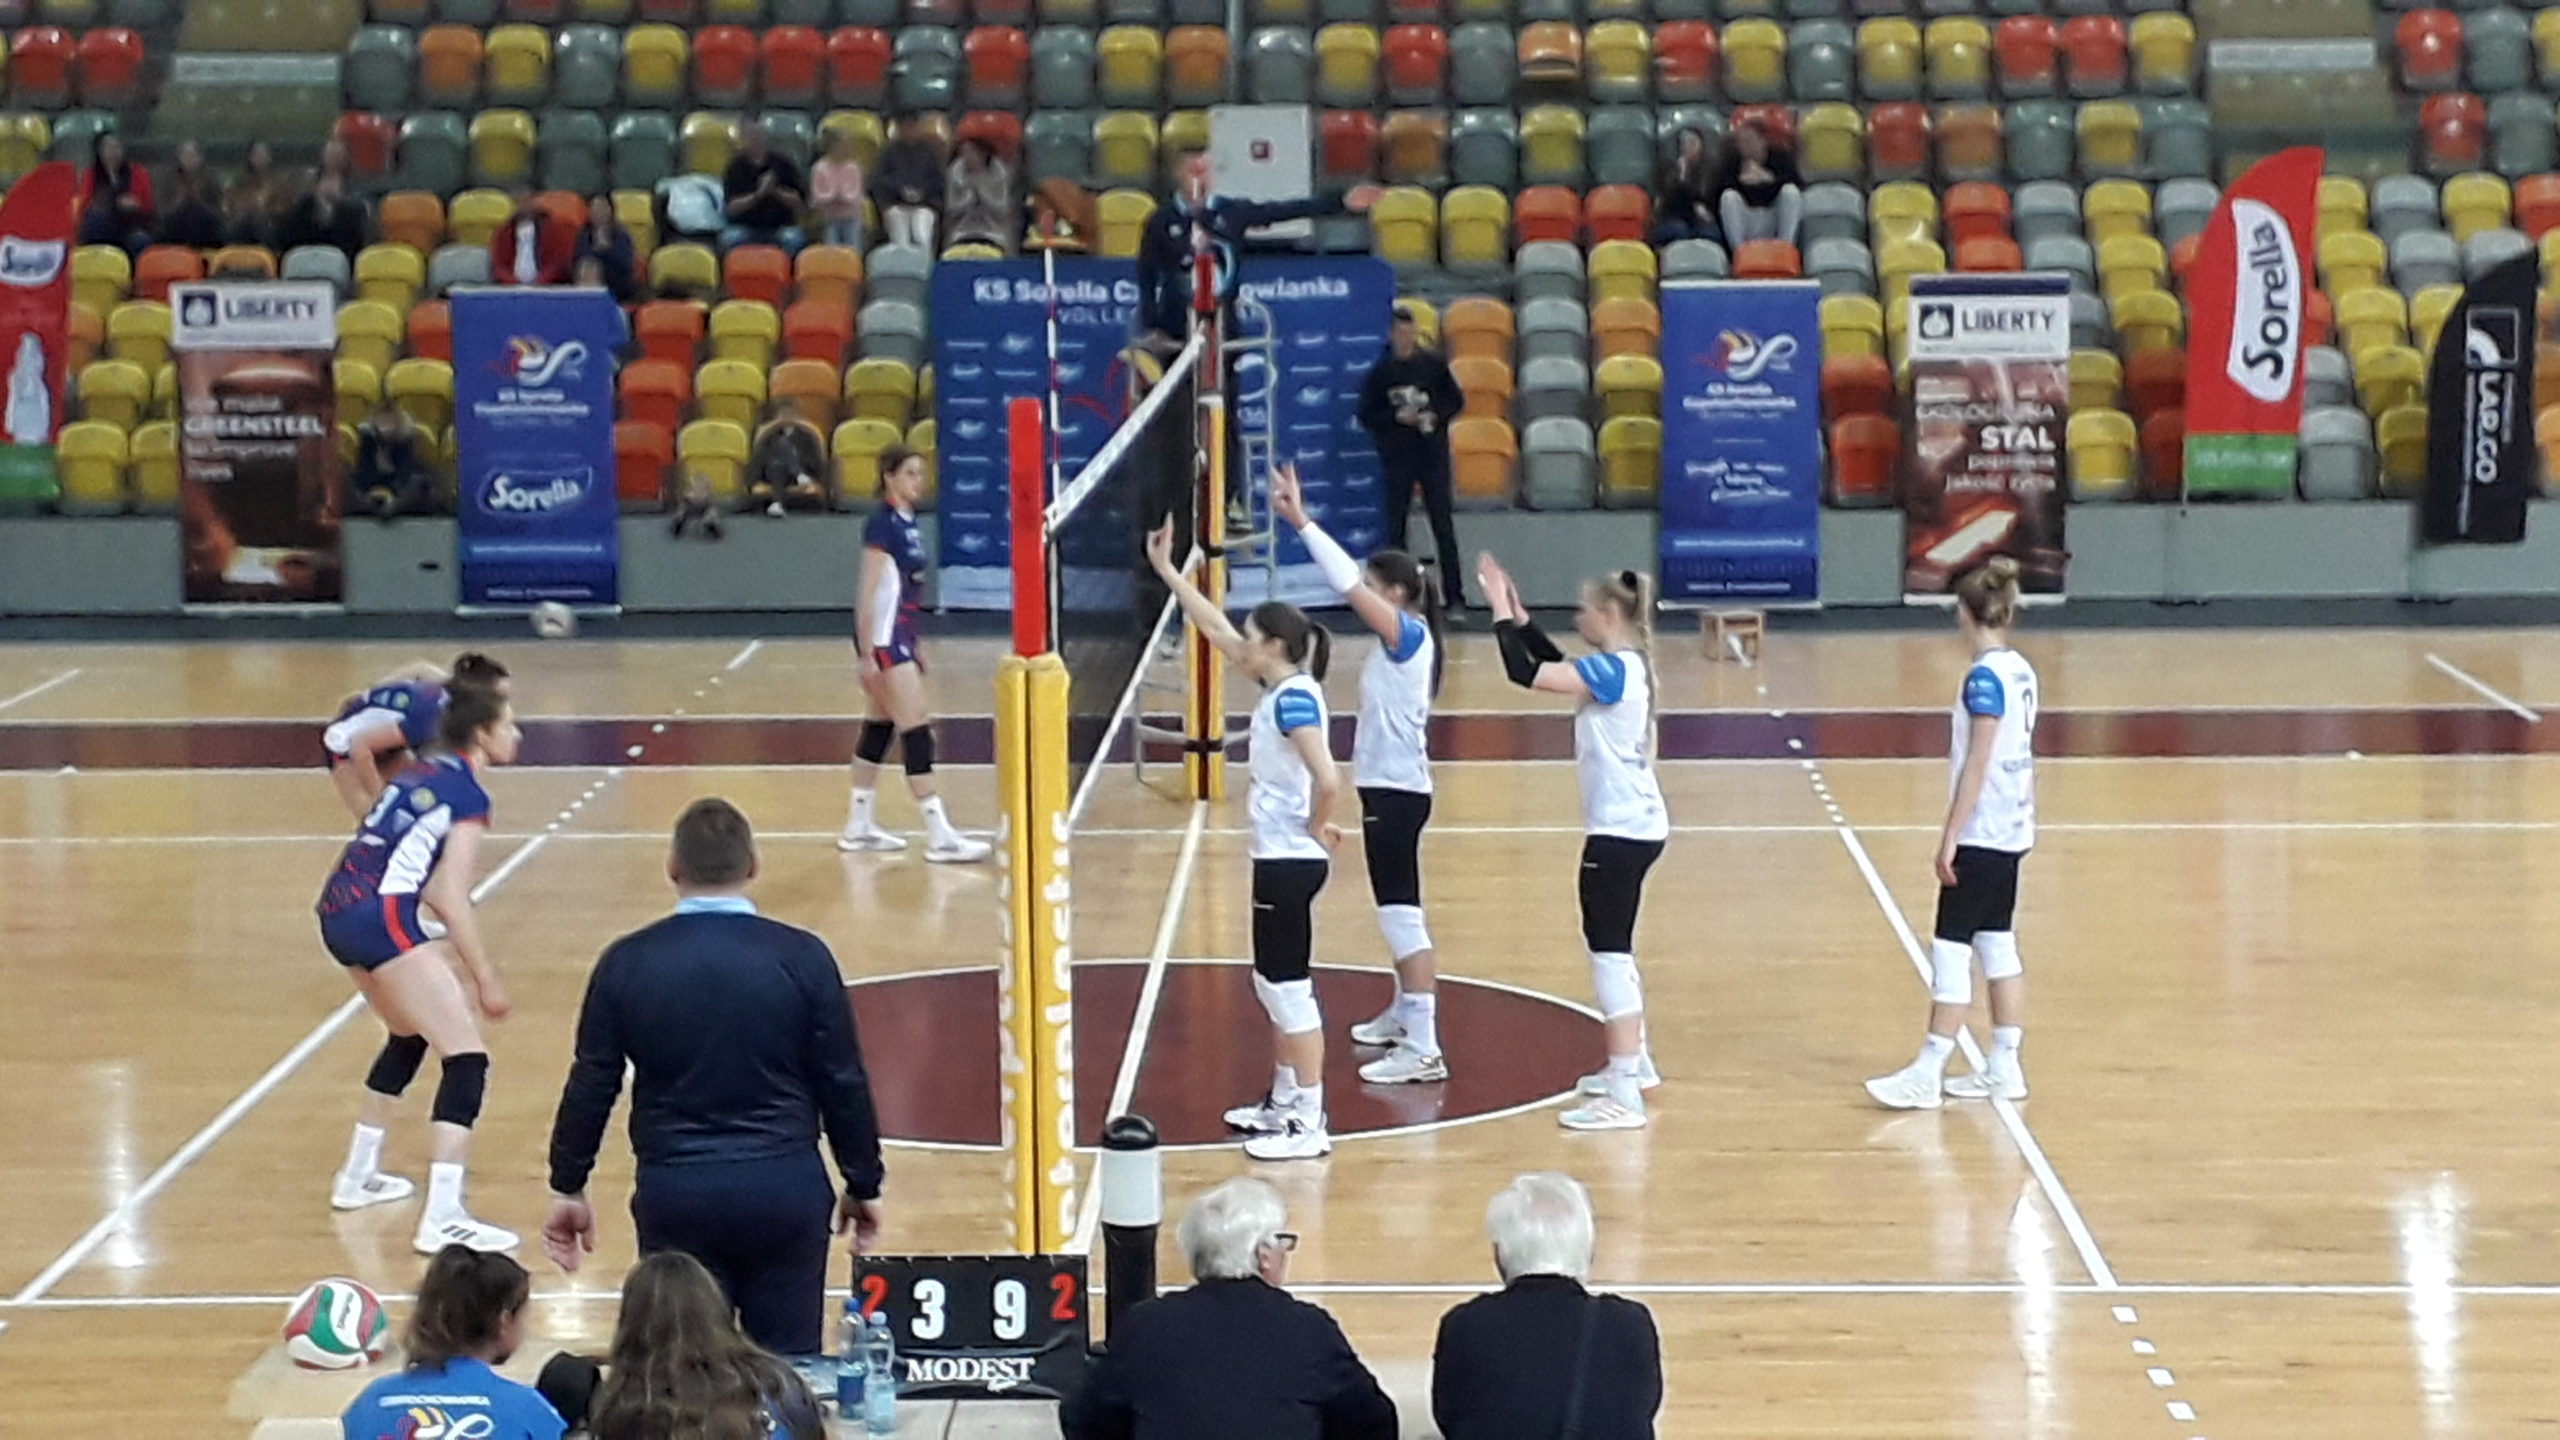 LIBERTY Częstochowa renews its support for local women’s volleyball team